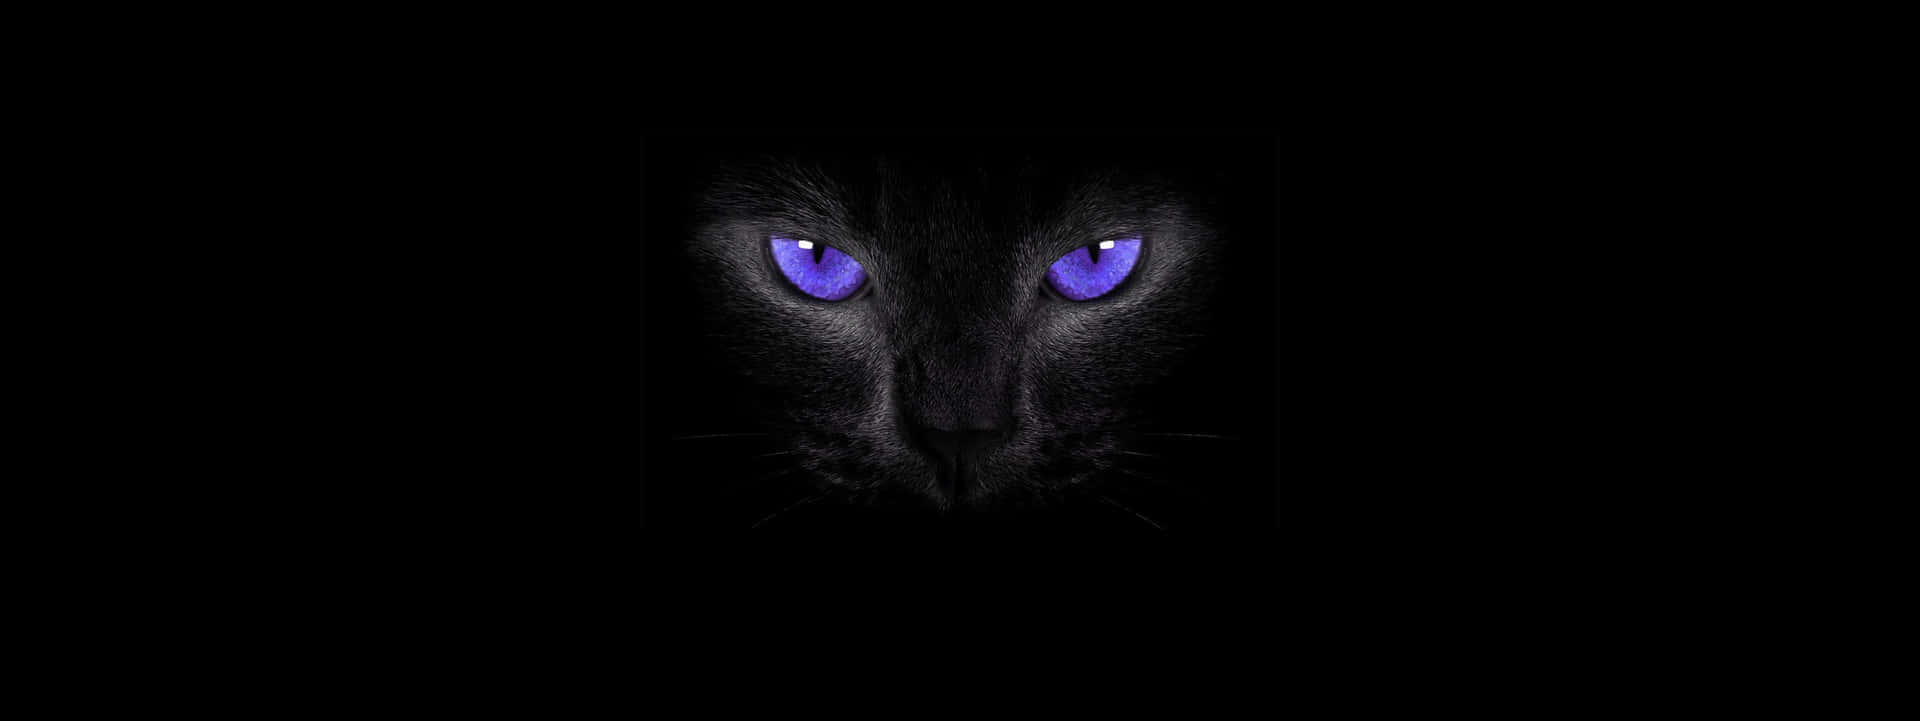 Purple Cat Eyes Black Cat